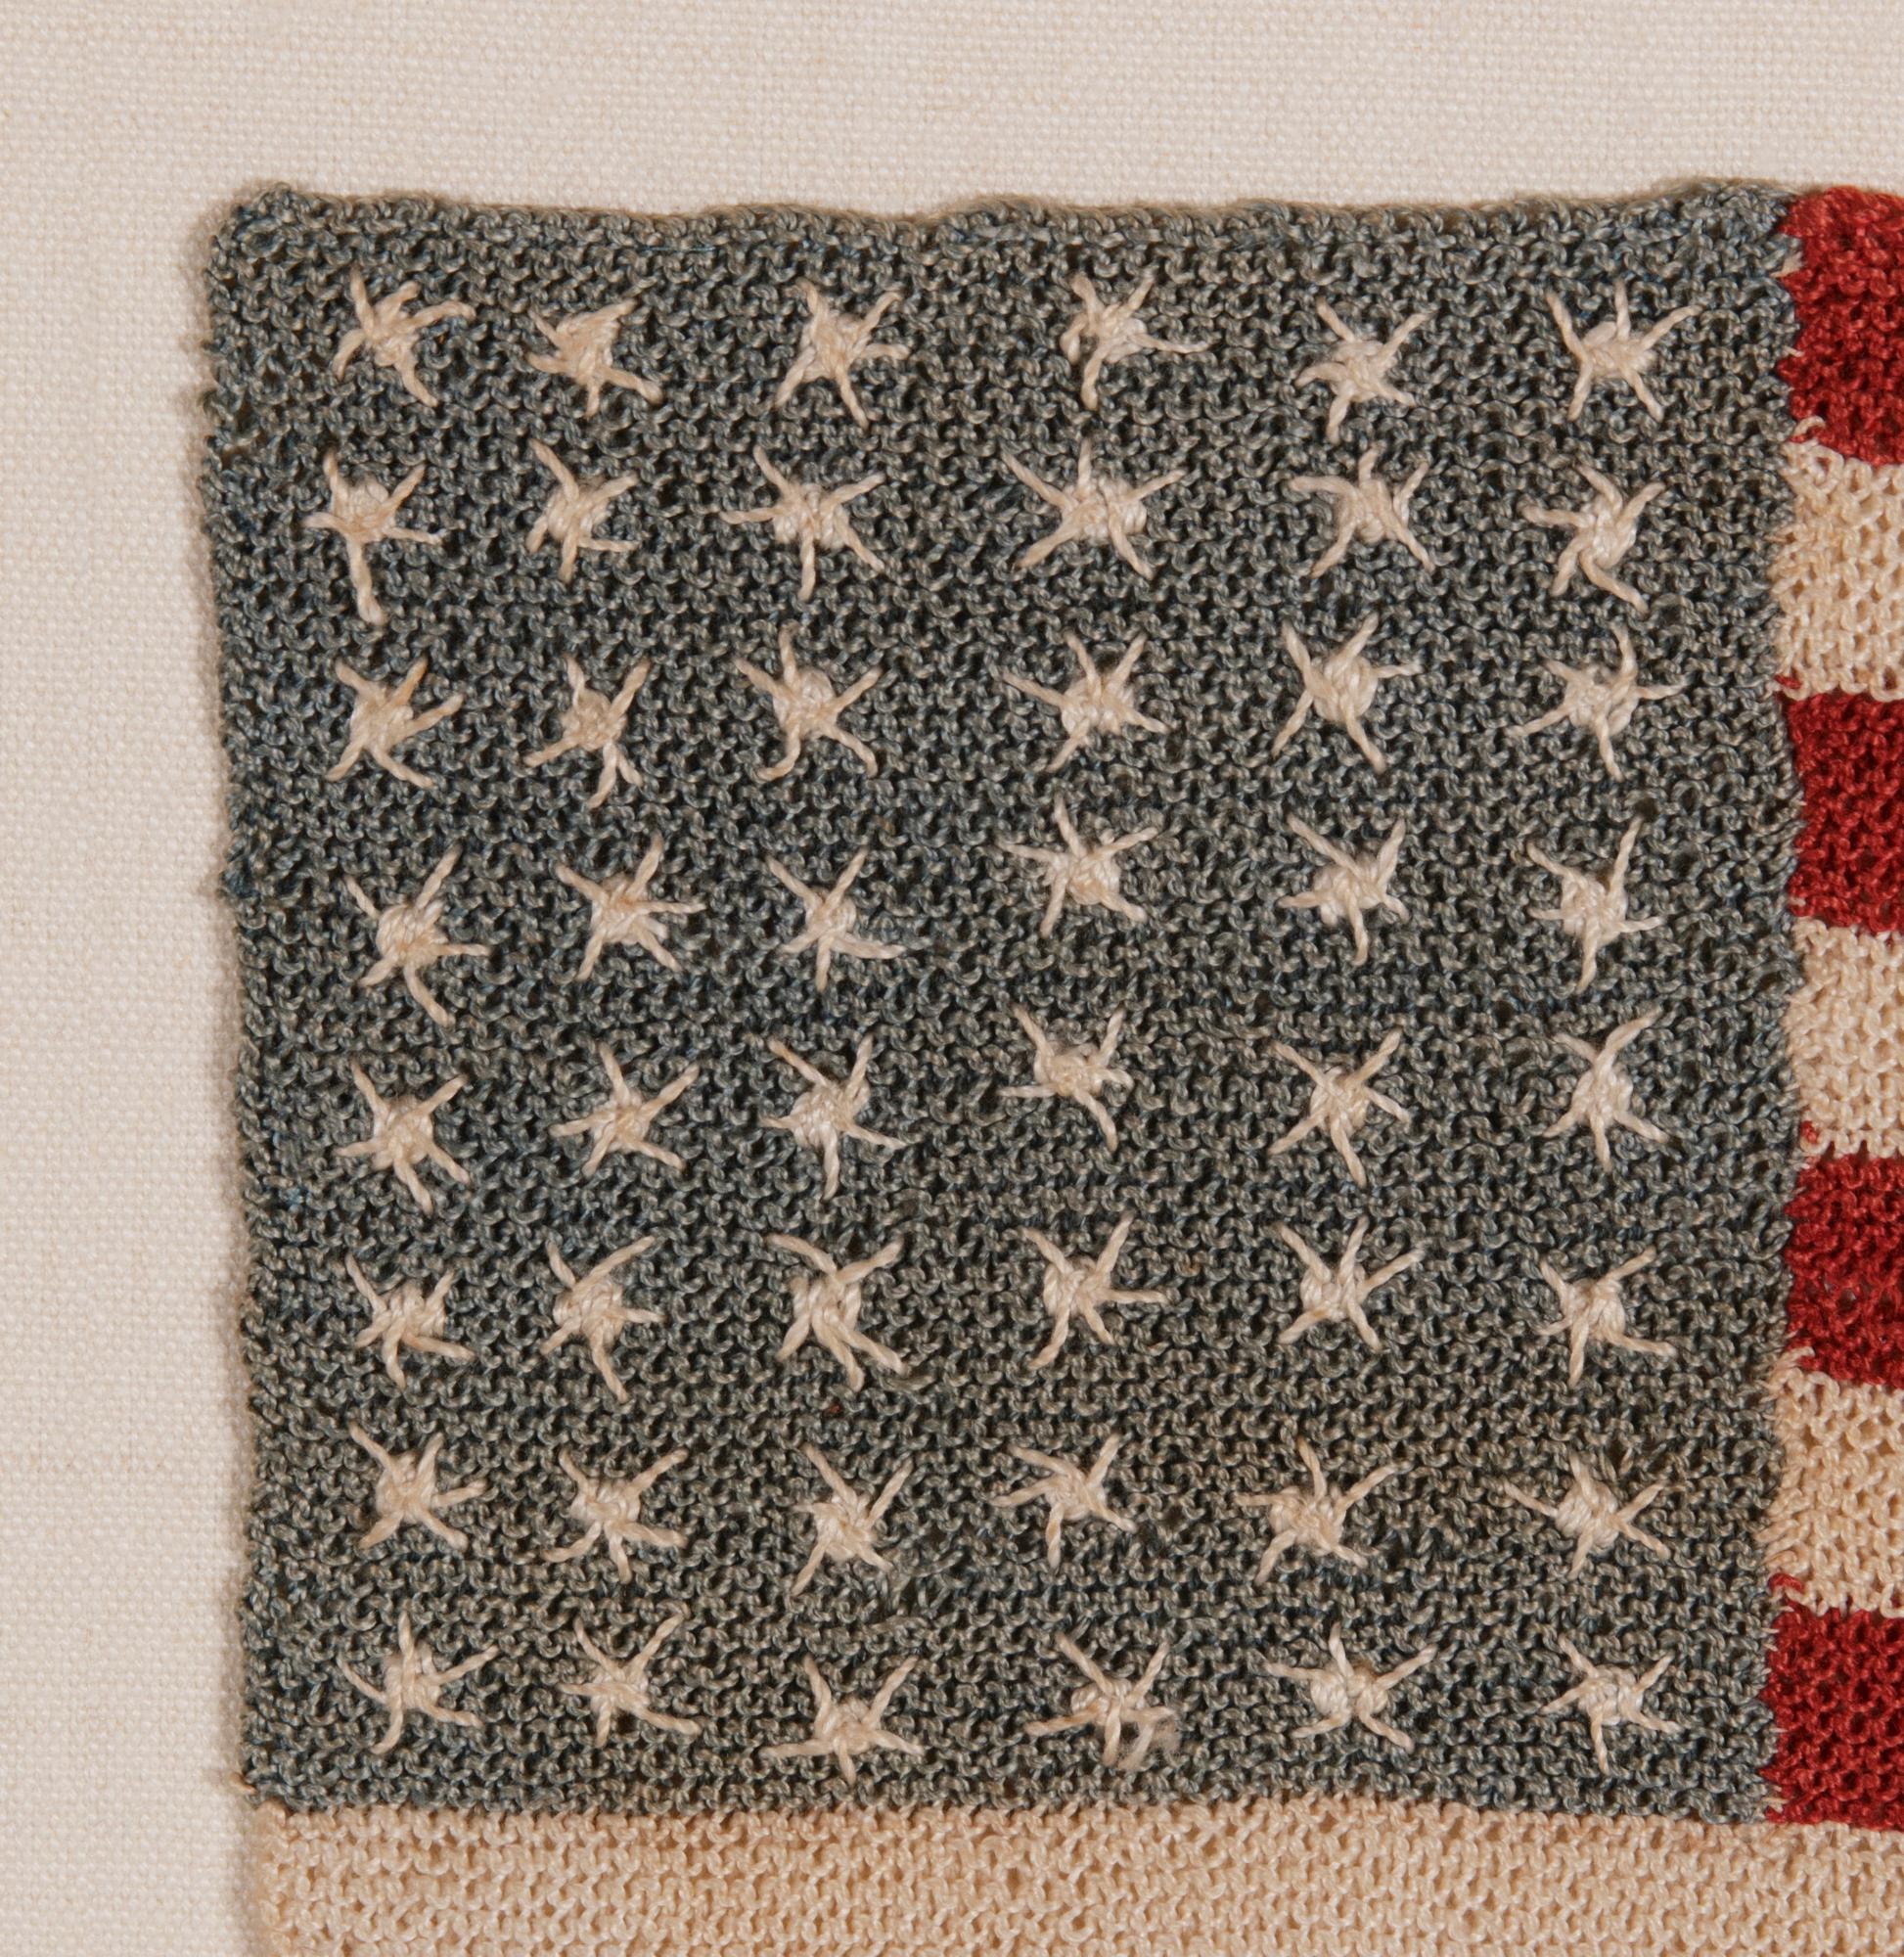 american flag 1861